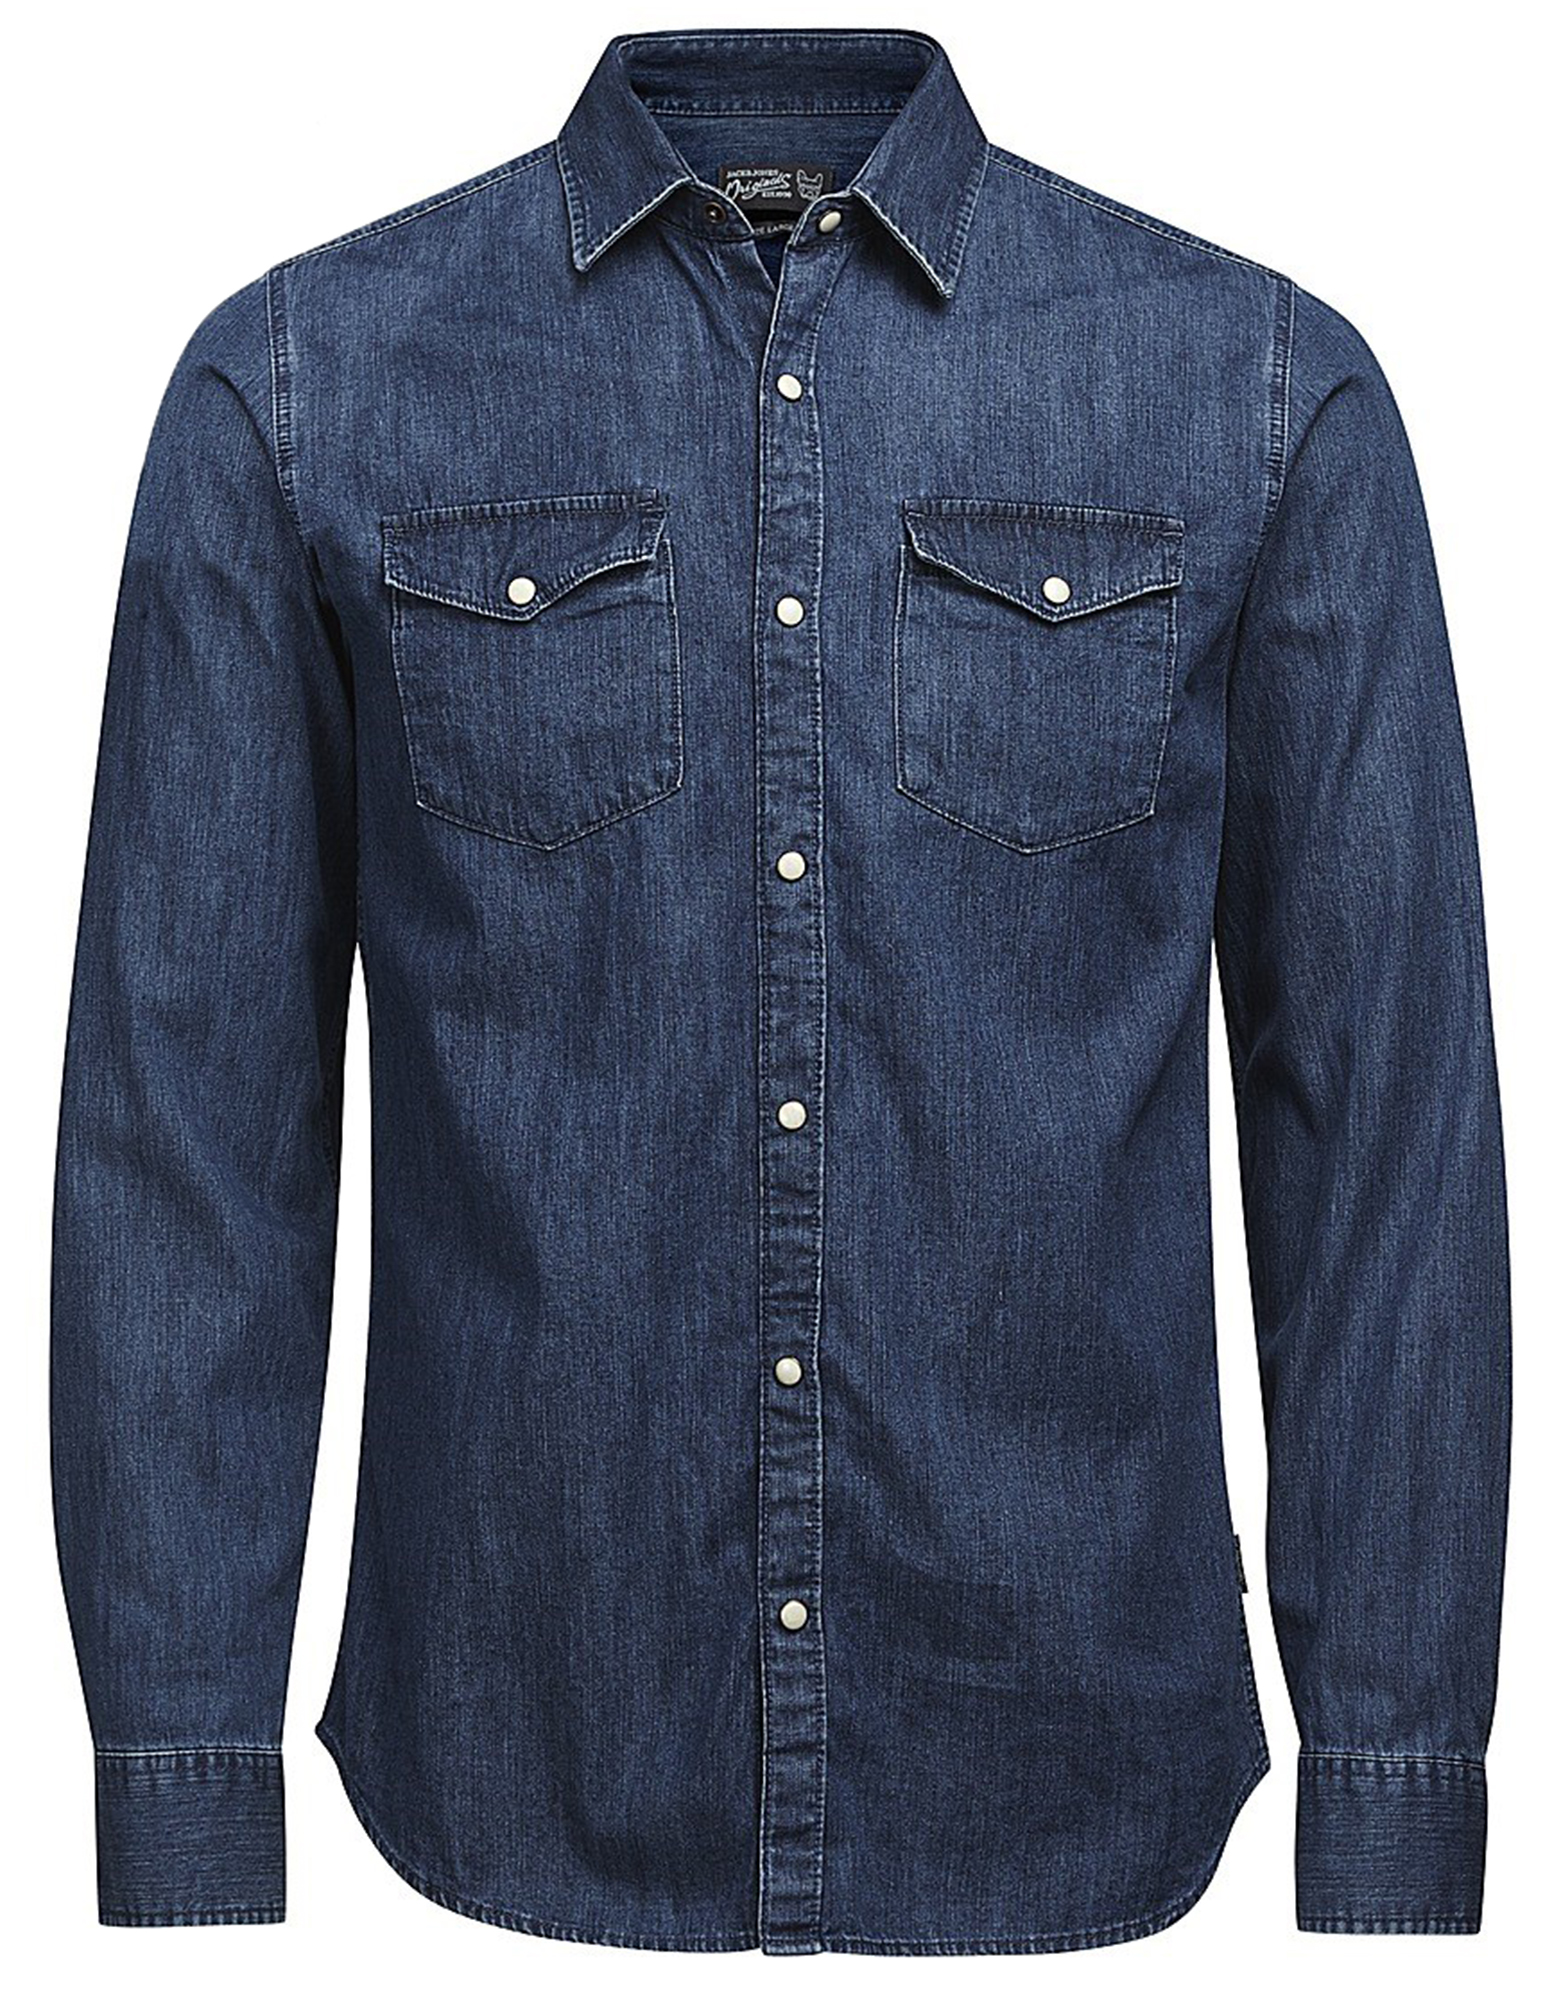 JACK & JONES Slim Fit Denim Shirt New Fashion Dark Blue & Black Jean ...